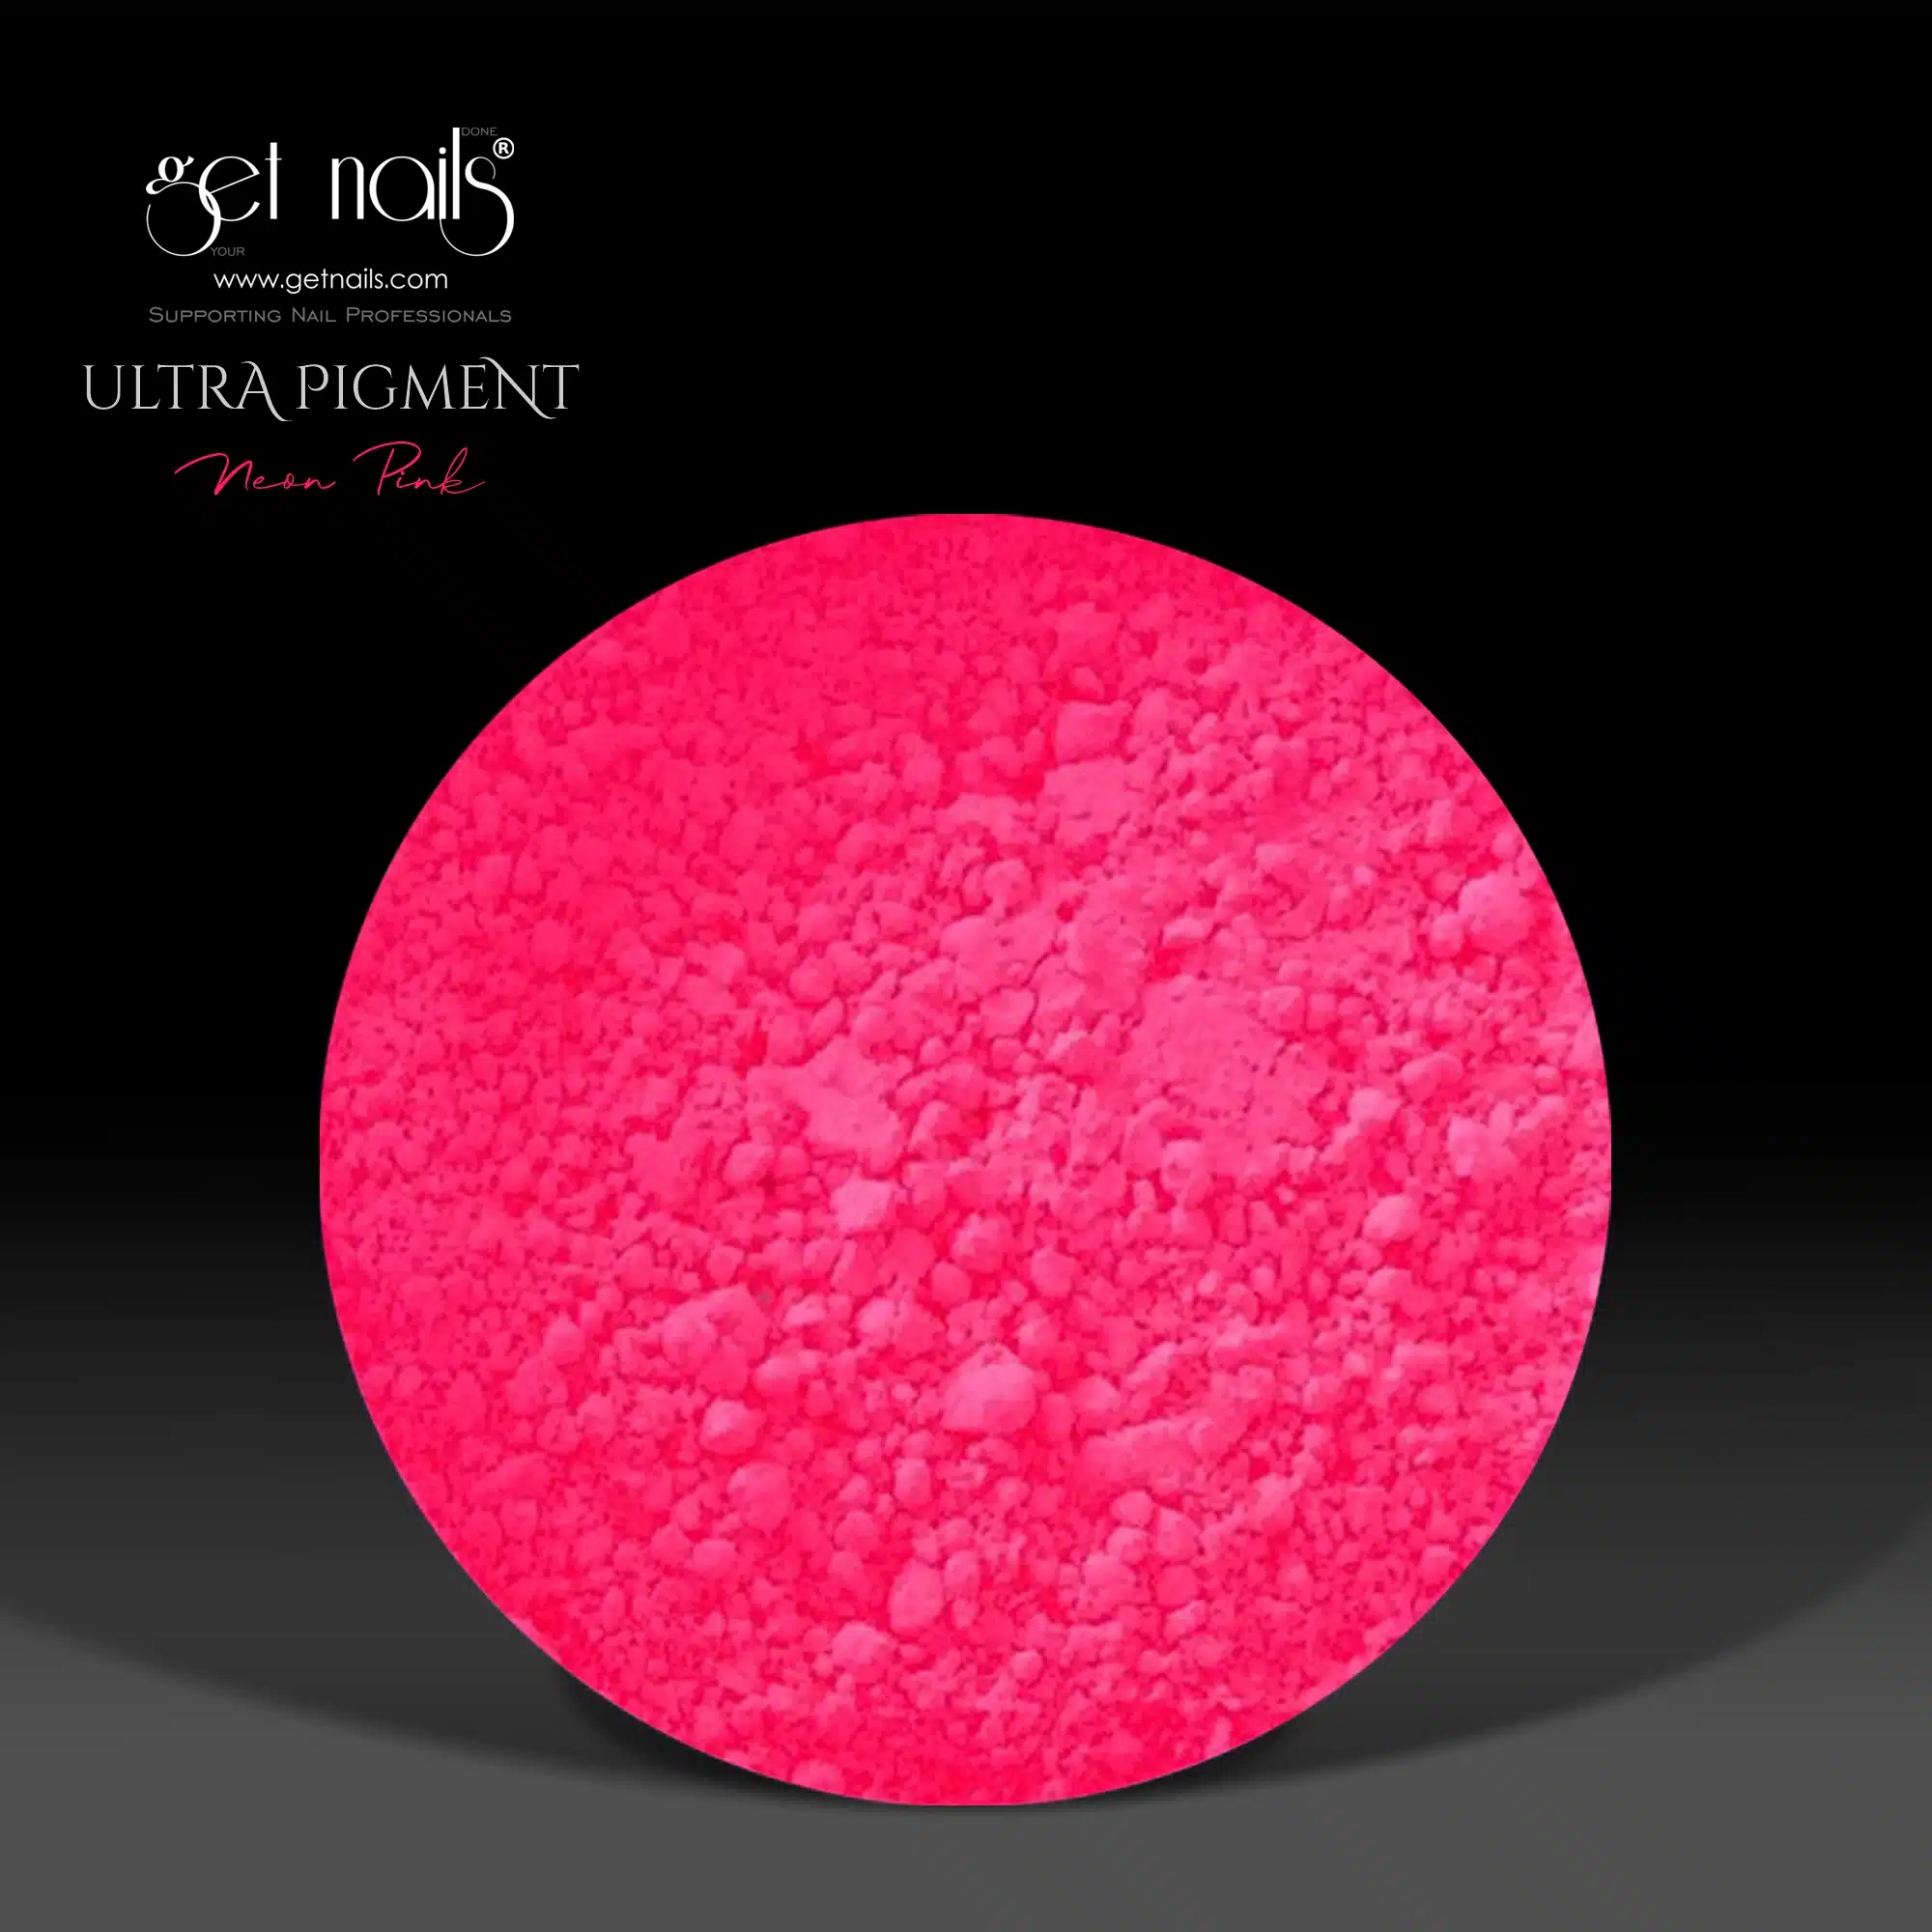 Get Nails Austria - Ultra Pigment Neon Pink 1.5g